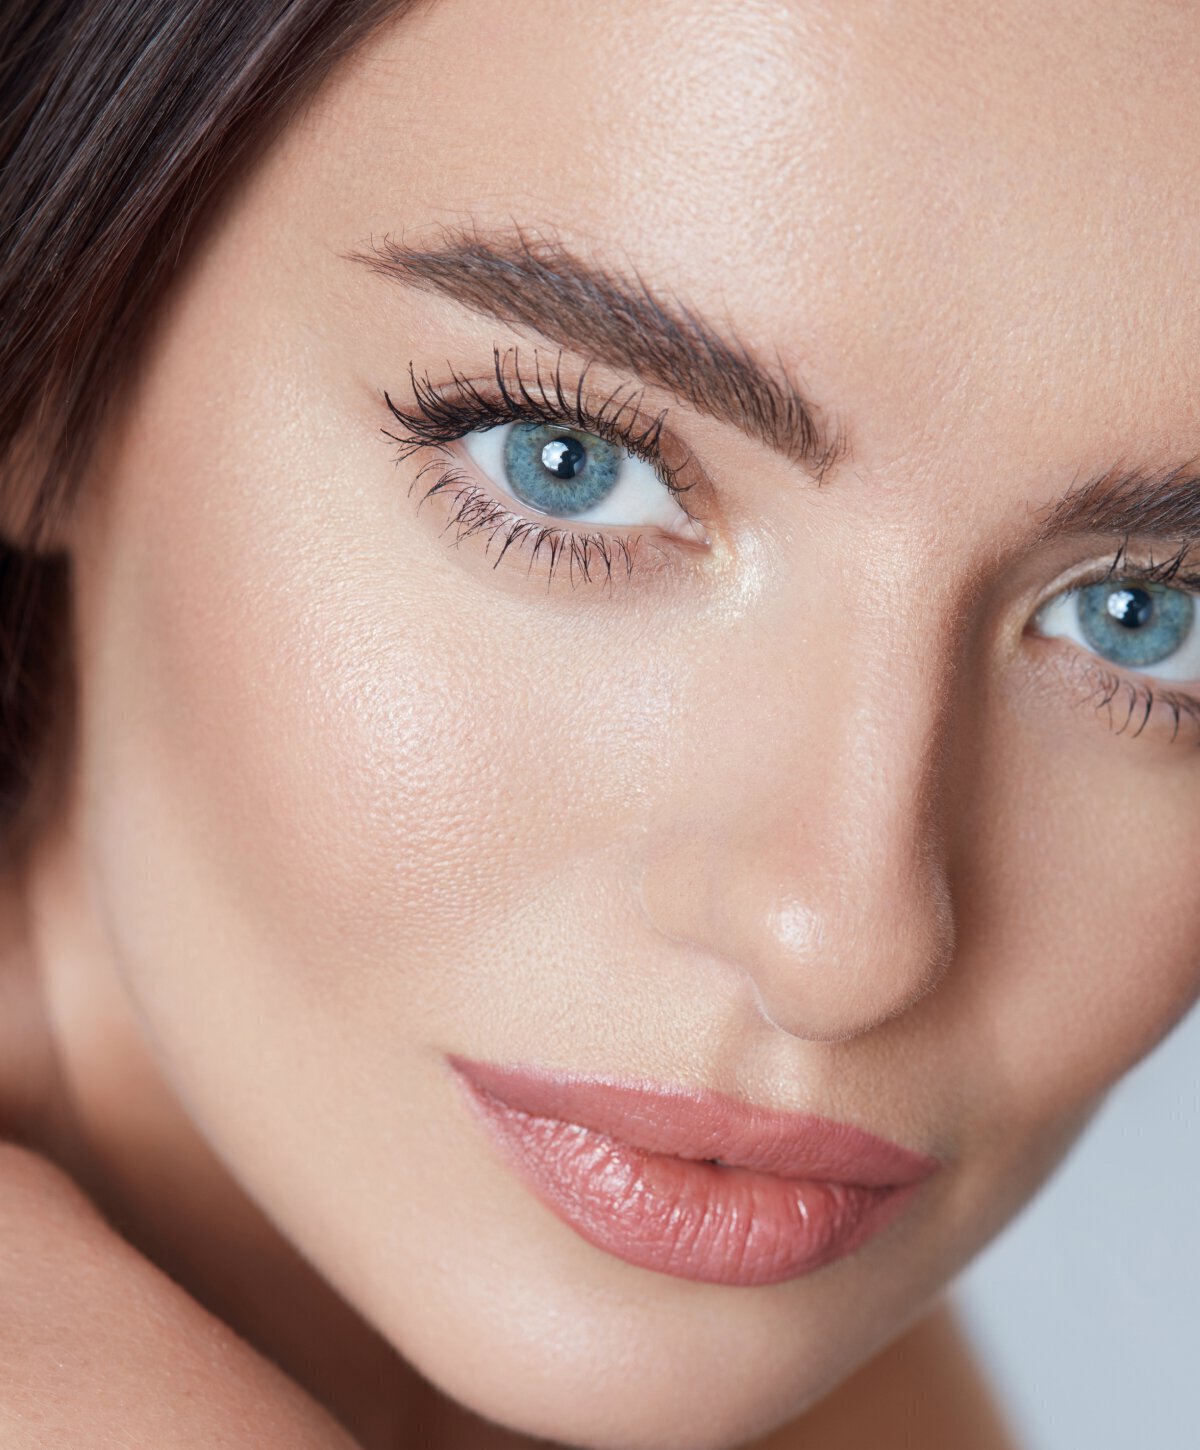 Vero Beach Botox model with blue eyes